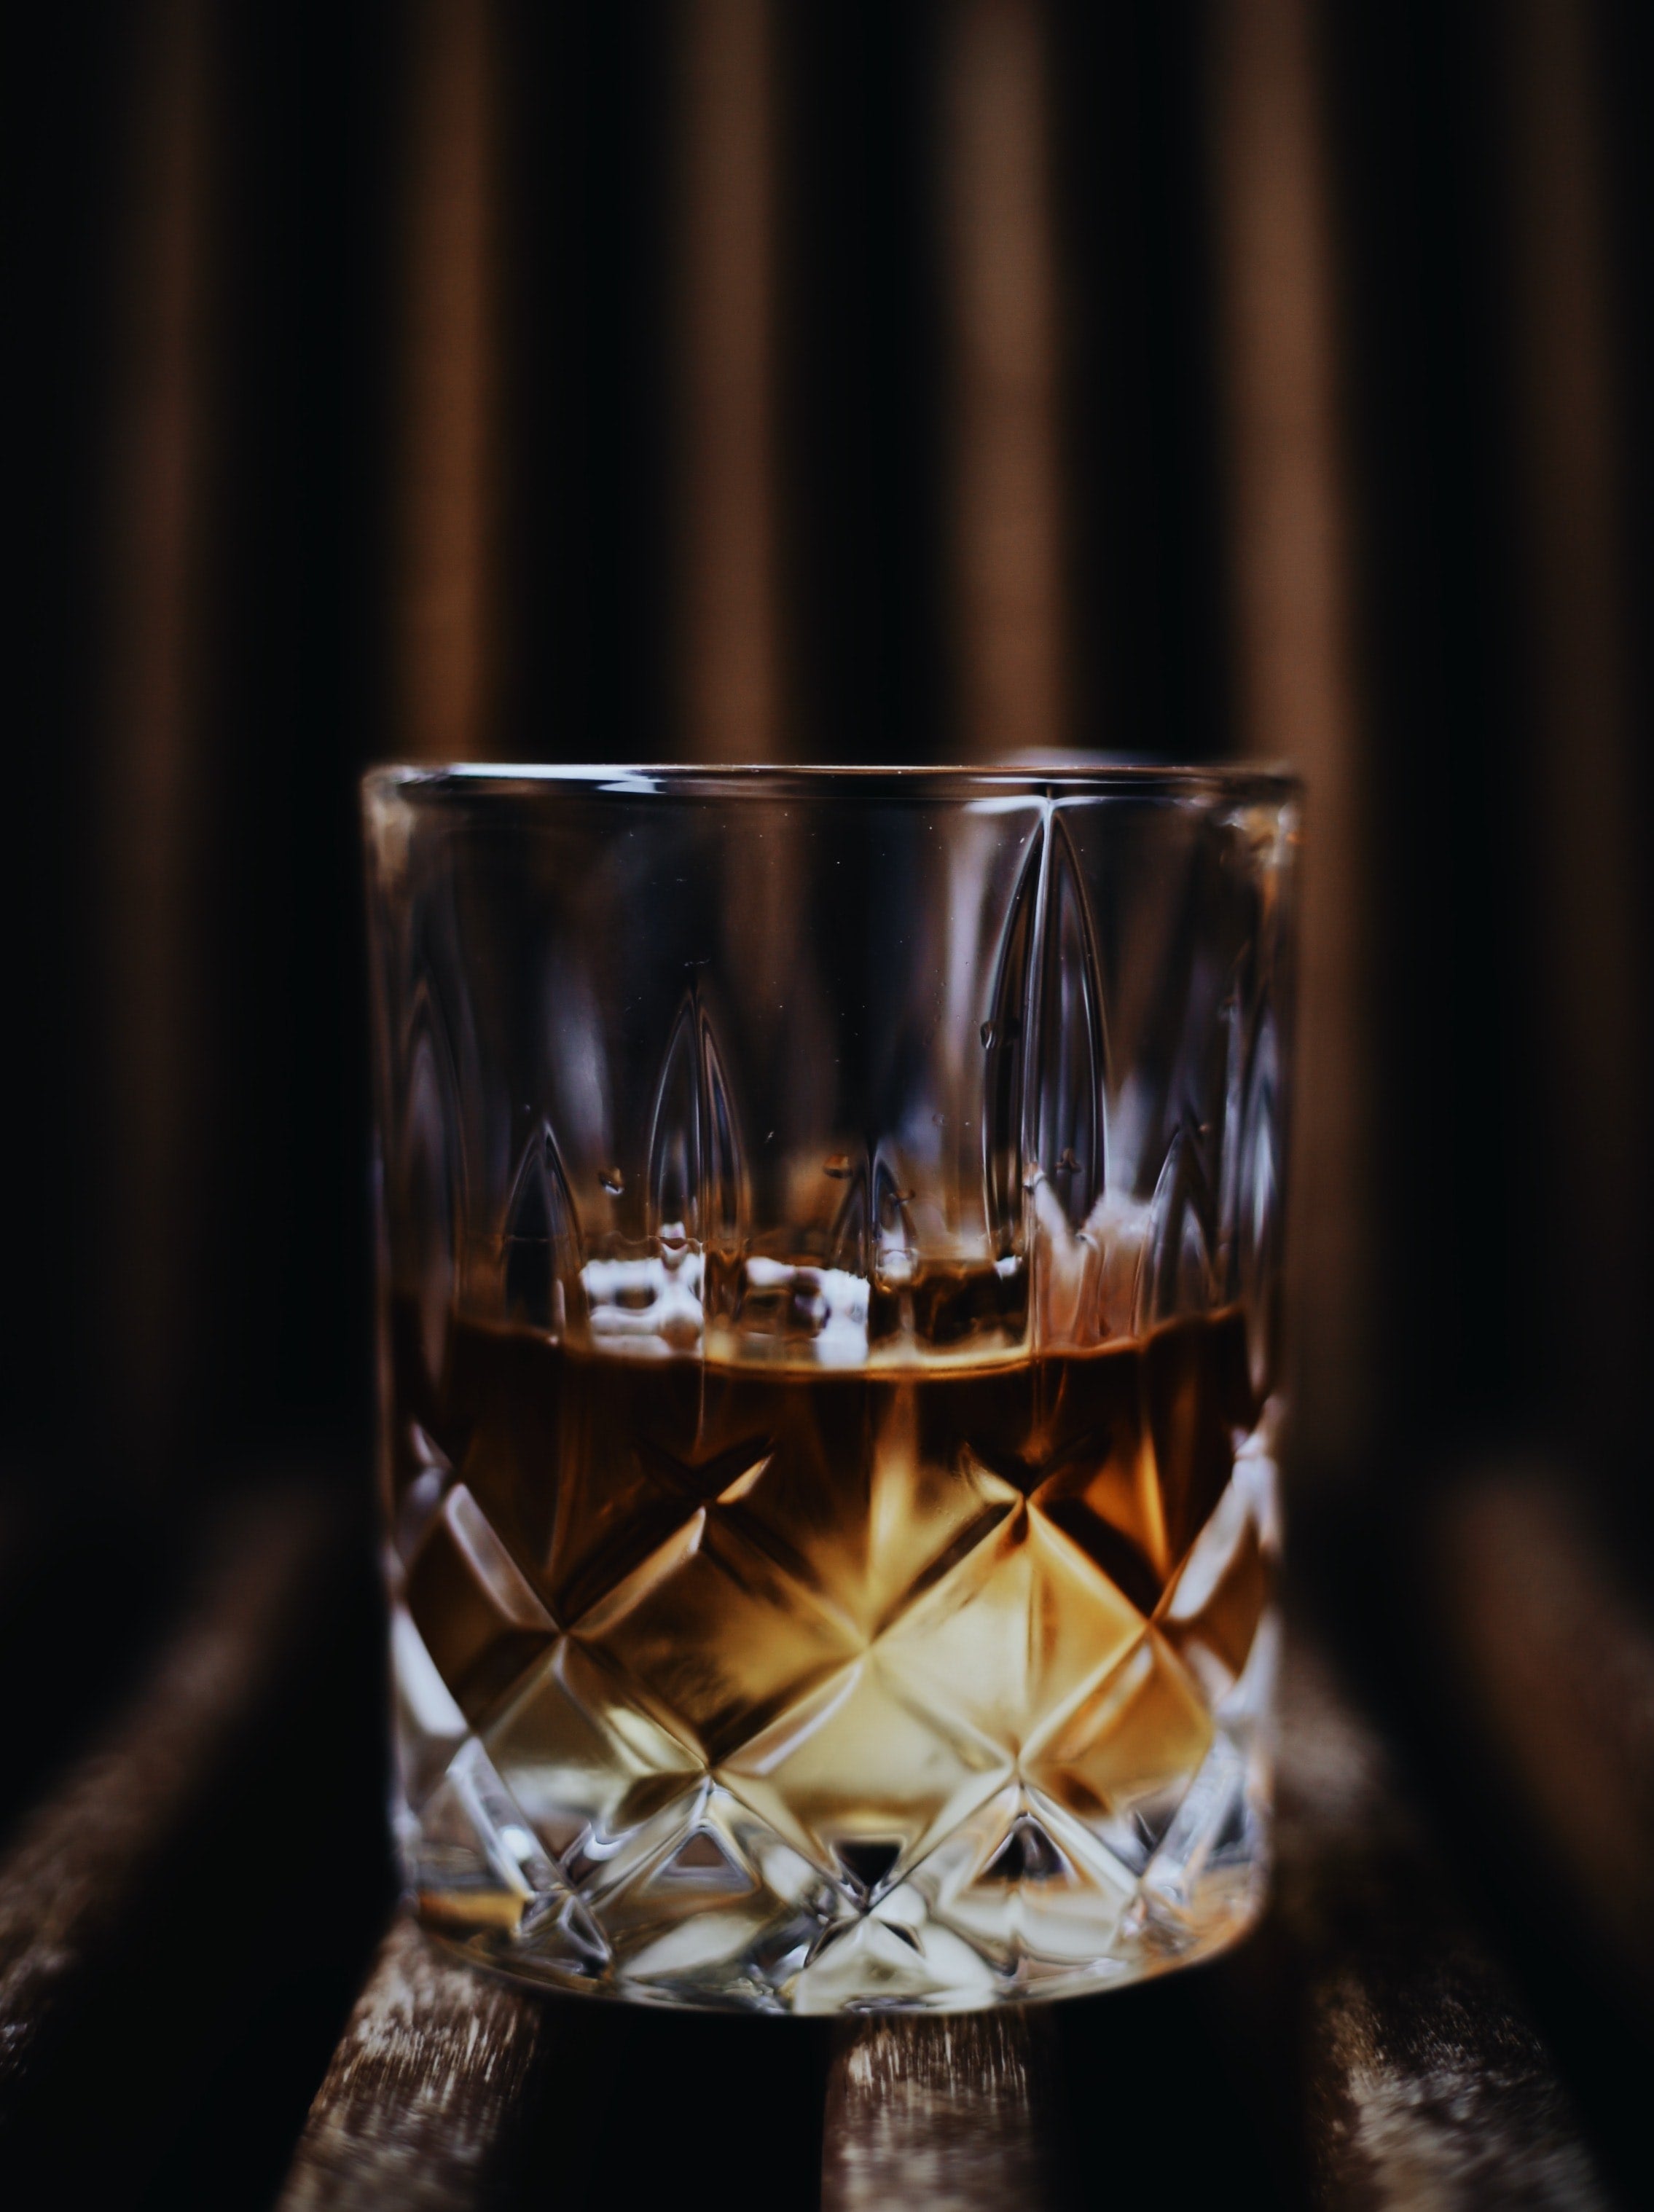 Rum-Tasting